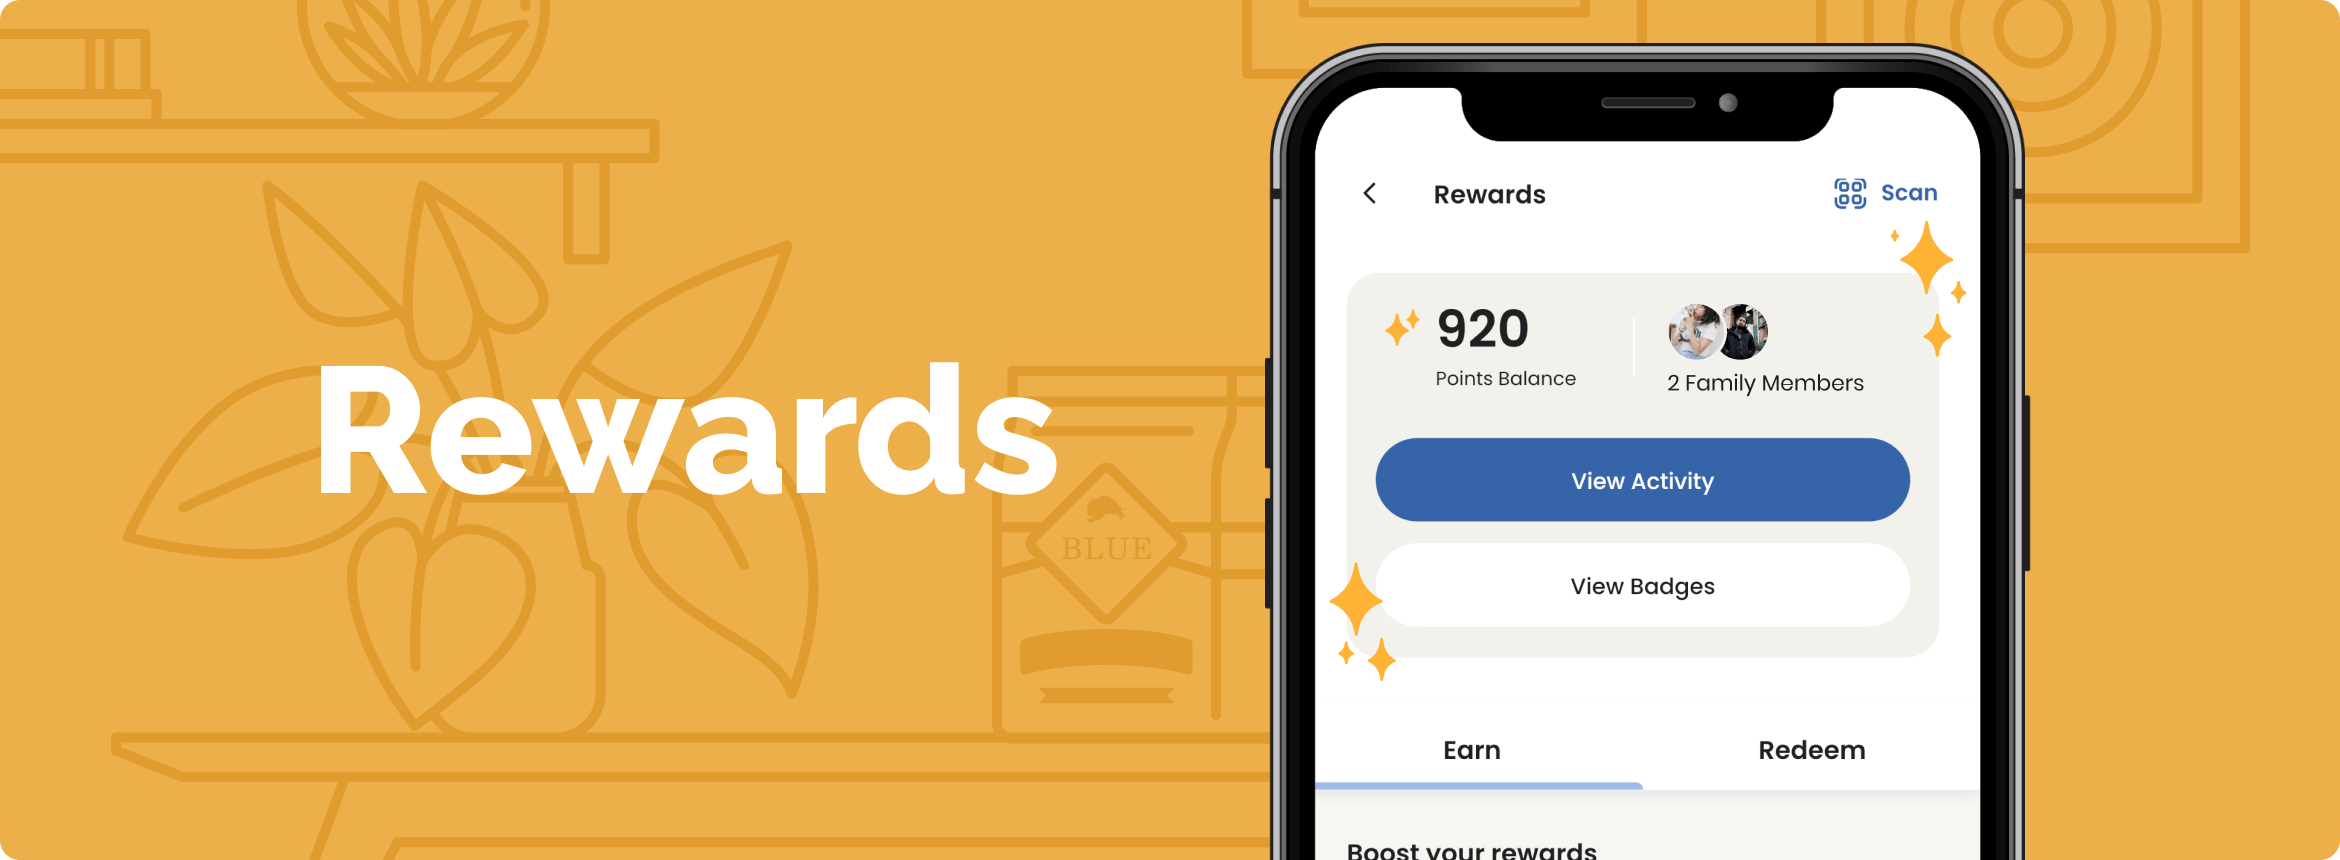 Rewards illustration of Buddies app